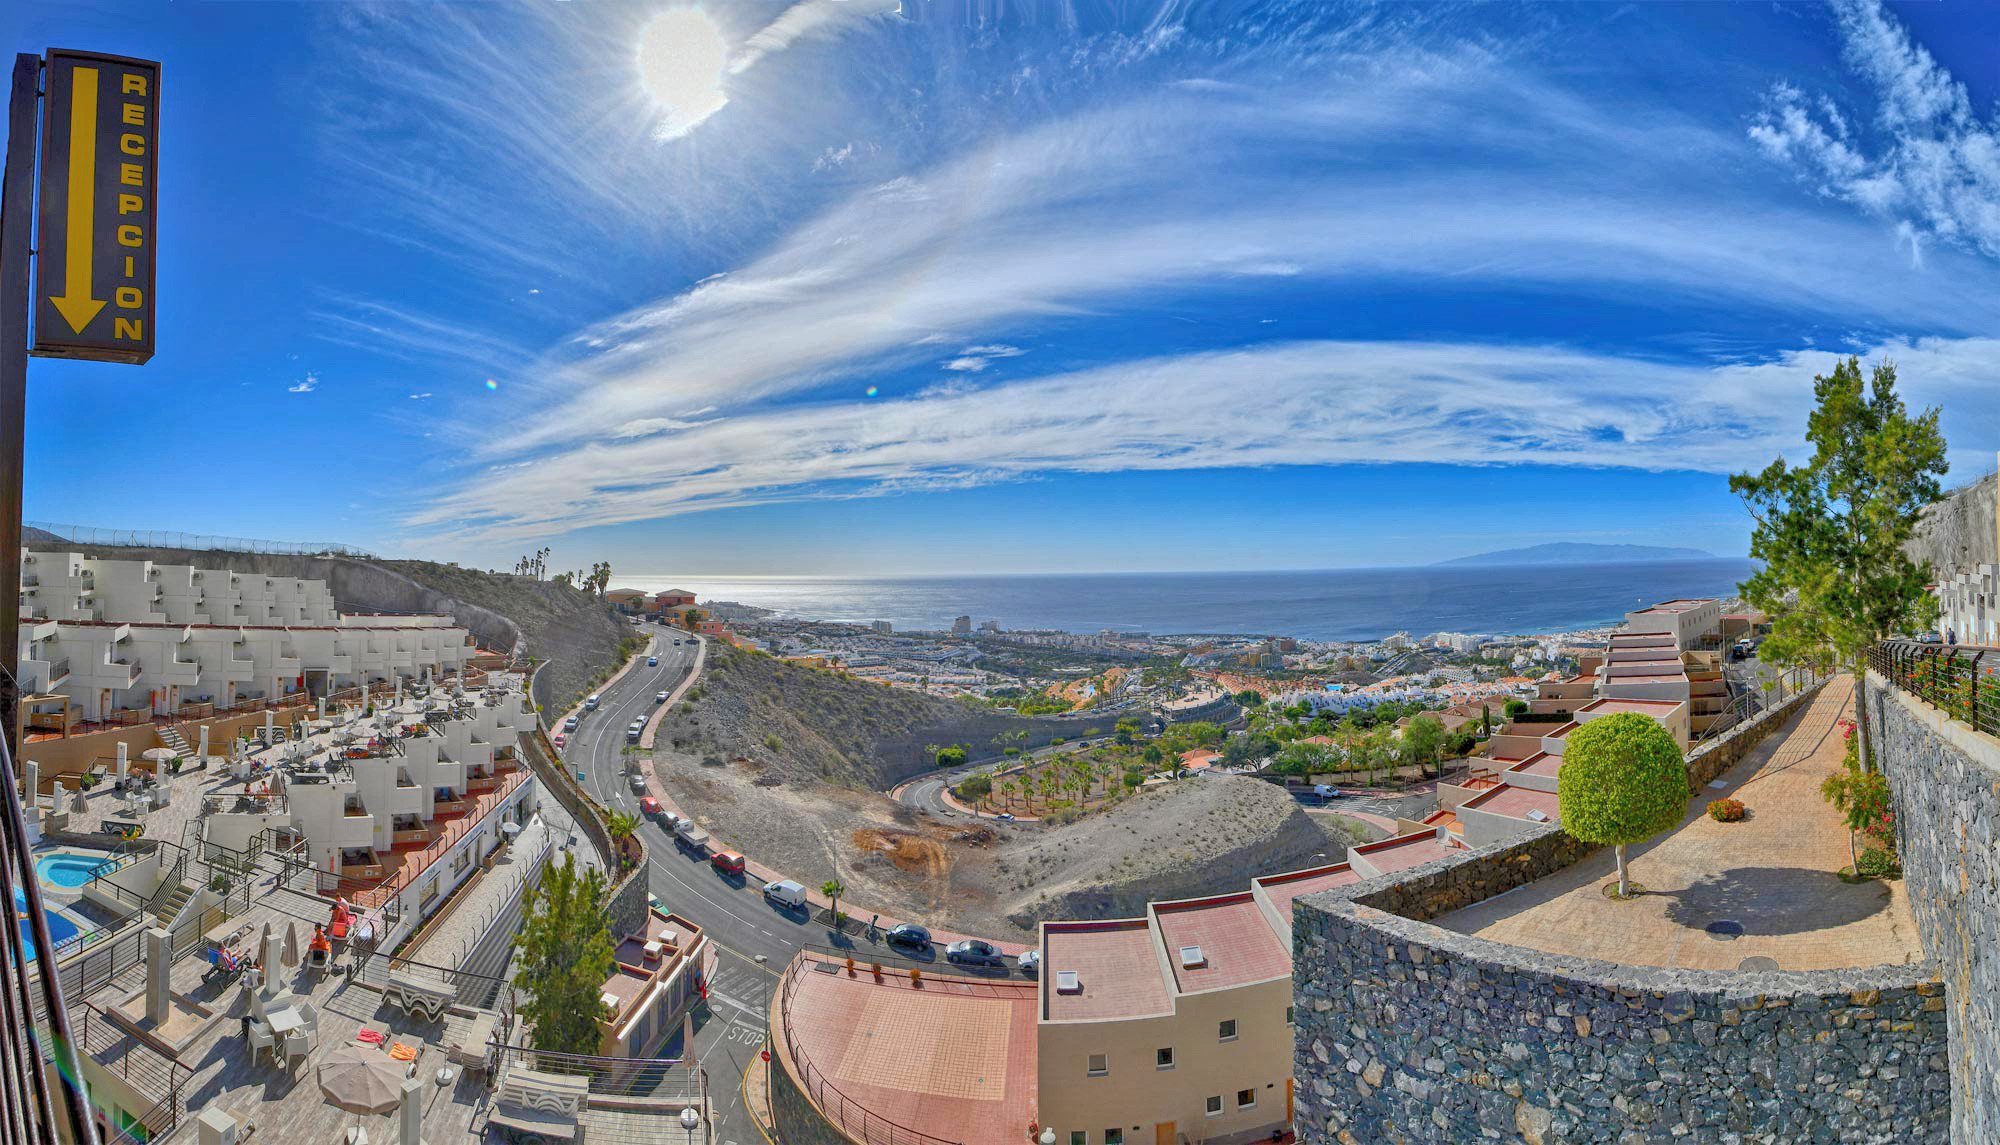 Pamoramica heights review: 3 staraparthotel in Costa Adeje, Tenerife